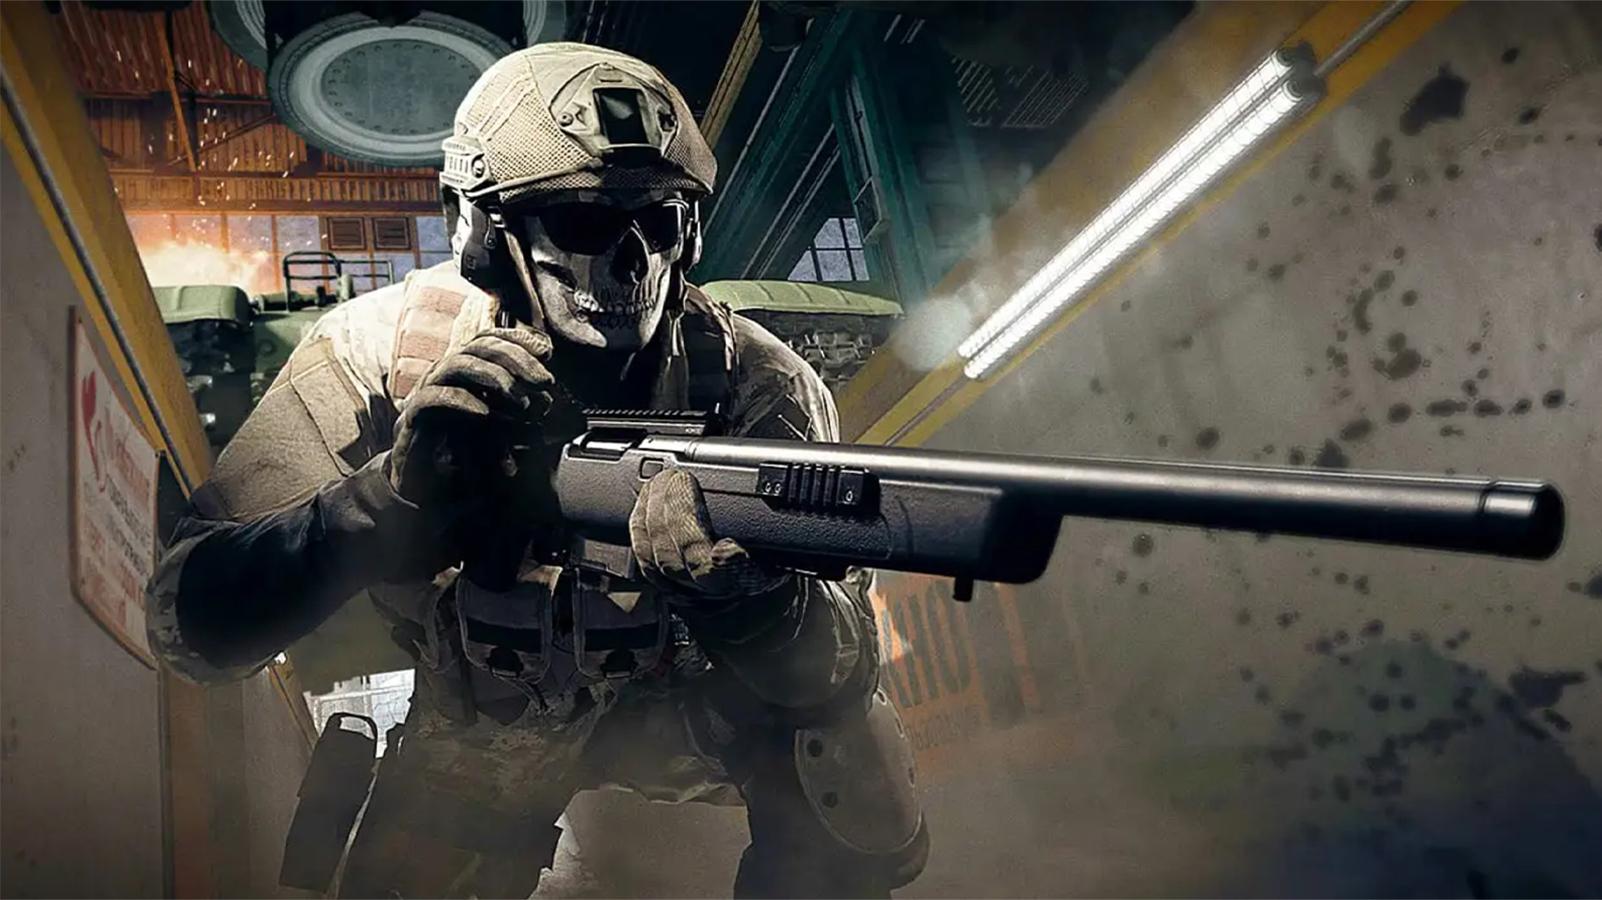 Call of Duty: Modern Warfare III gameplay details revealed